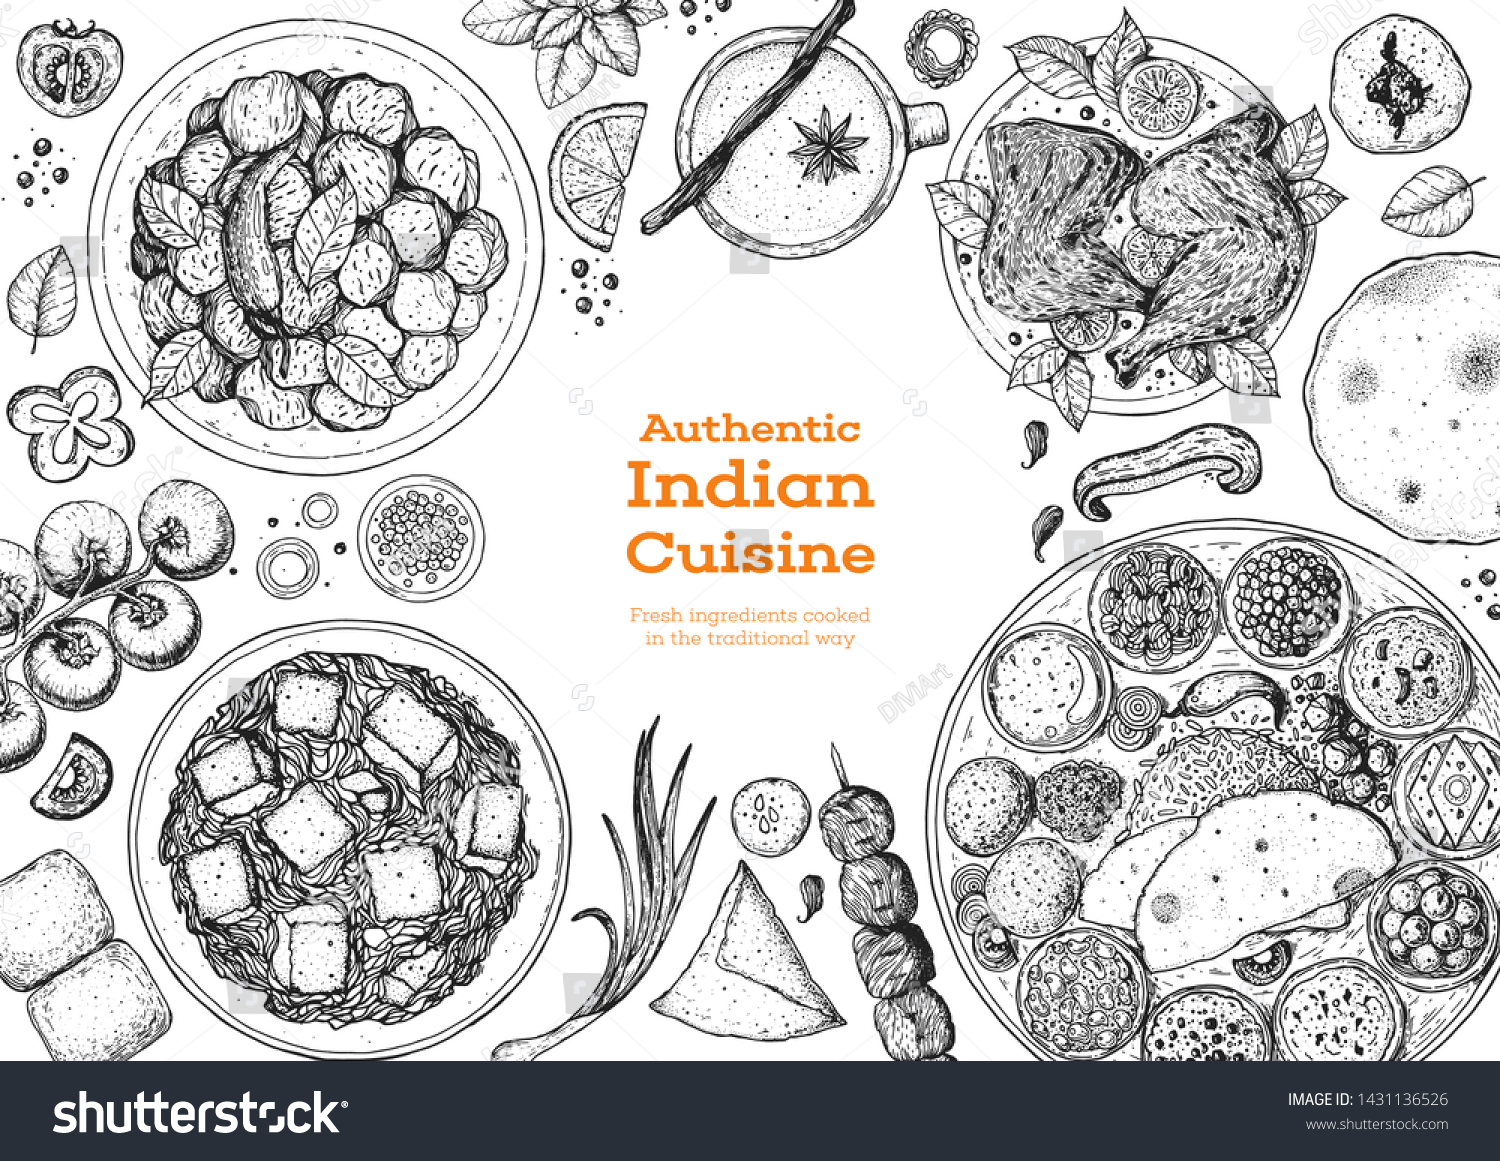 Indian food illustration. Hand drawn sketch. Indian cuisine. Doodle collection. Vector illustration. Menu background. Engraved style.  #1431136526